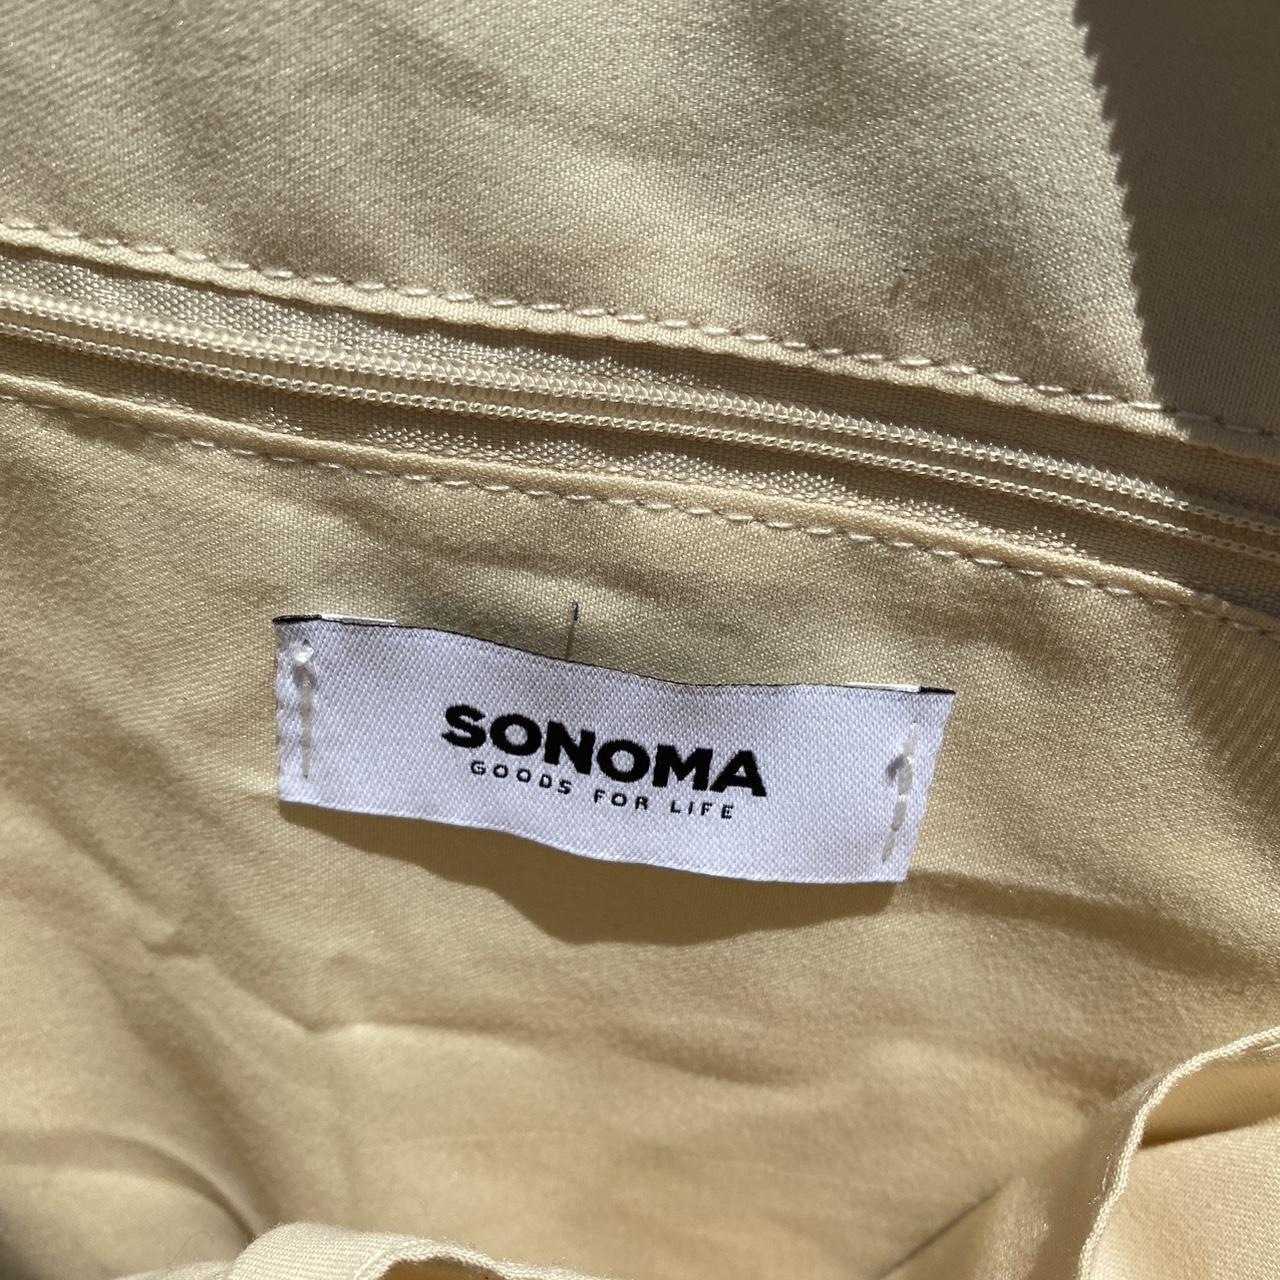 Sonoma Goods for Life Bag - Depop